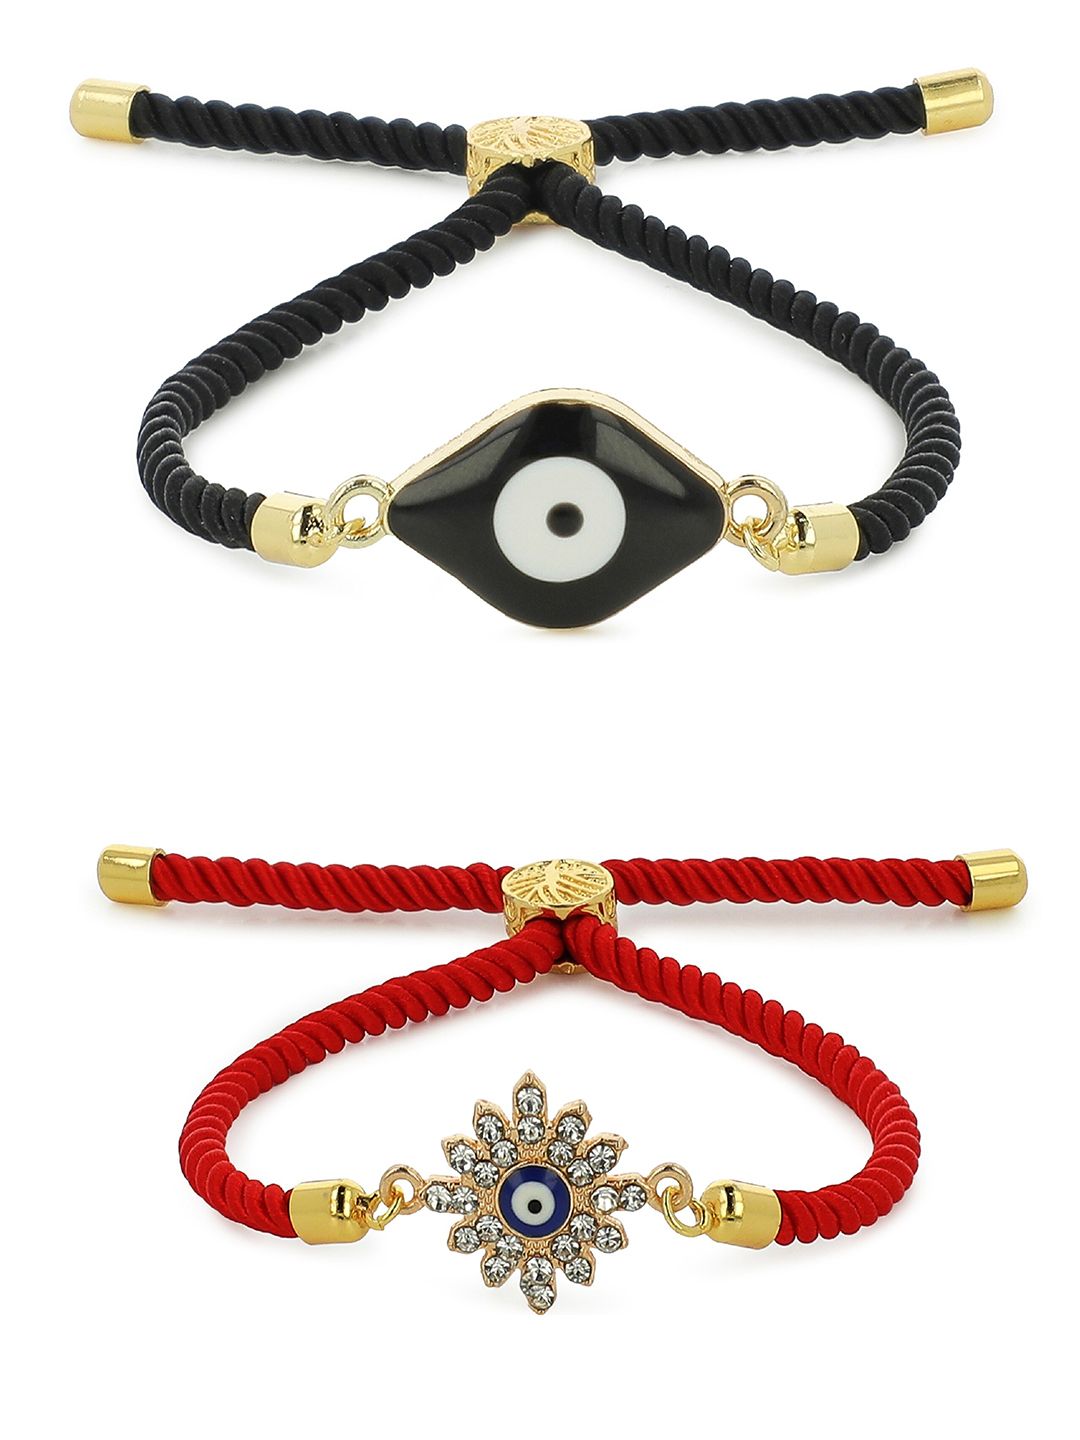 EL REGALO Unisex 2pcs Red & Black Gold-Plated Charm Bracelet Price in India